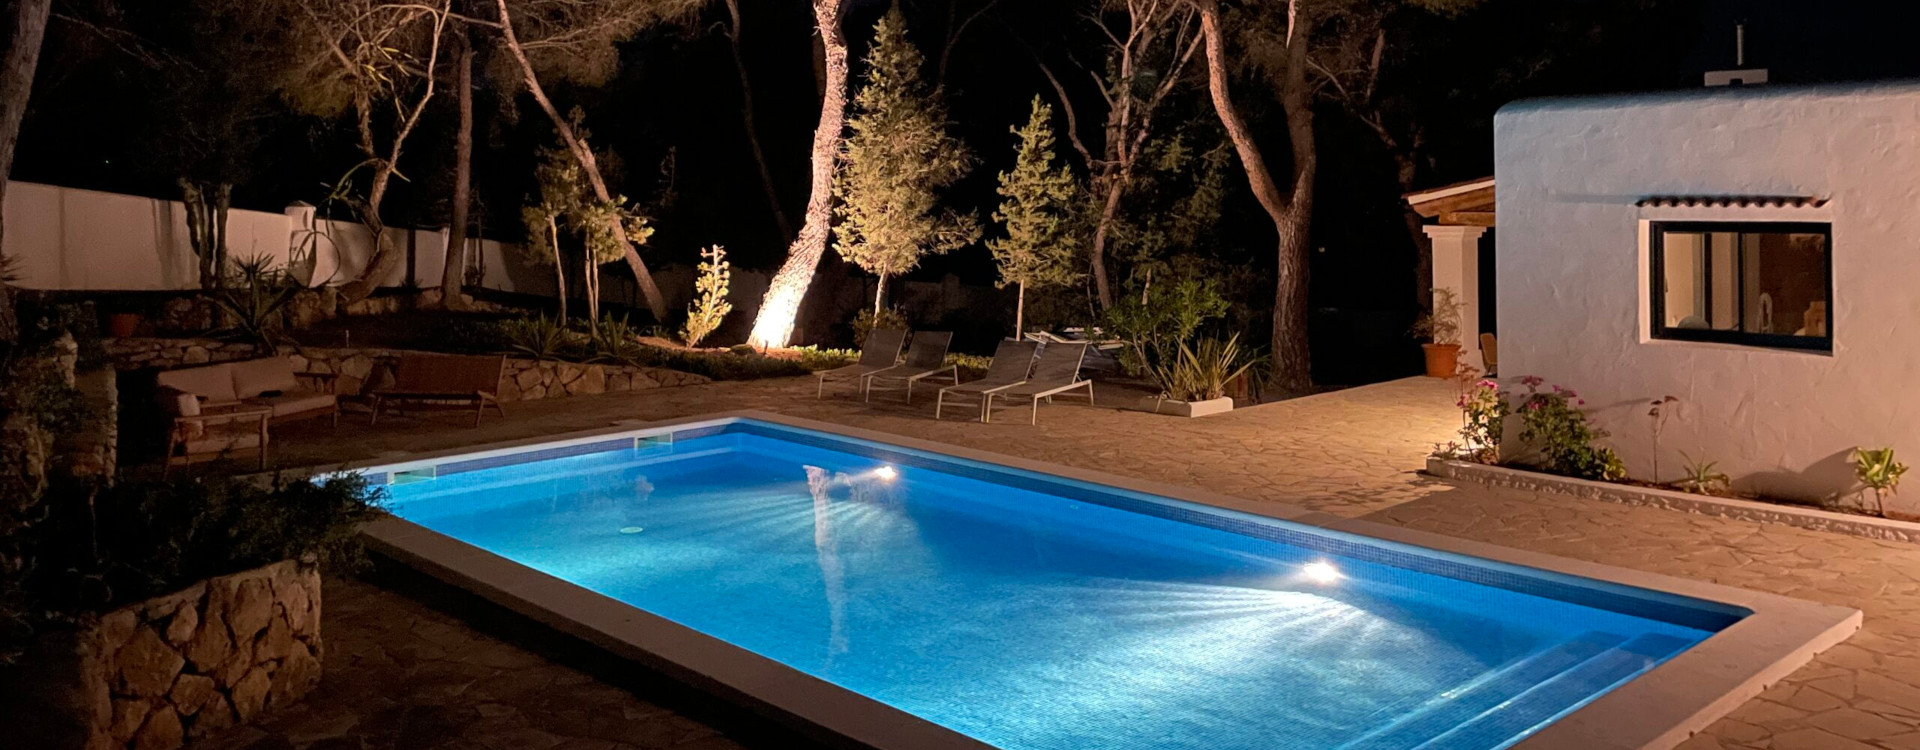 ibiza villa pool at night